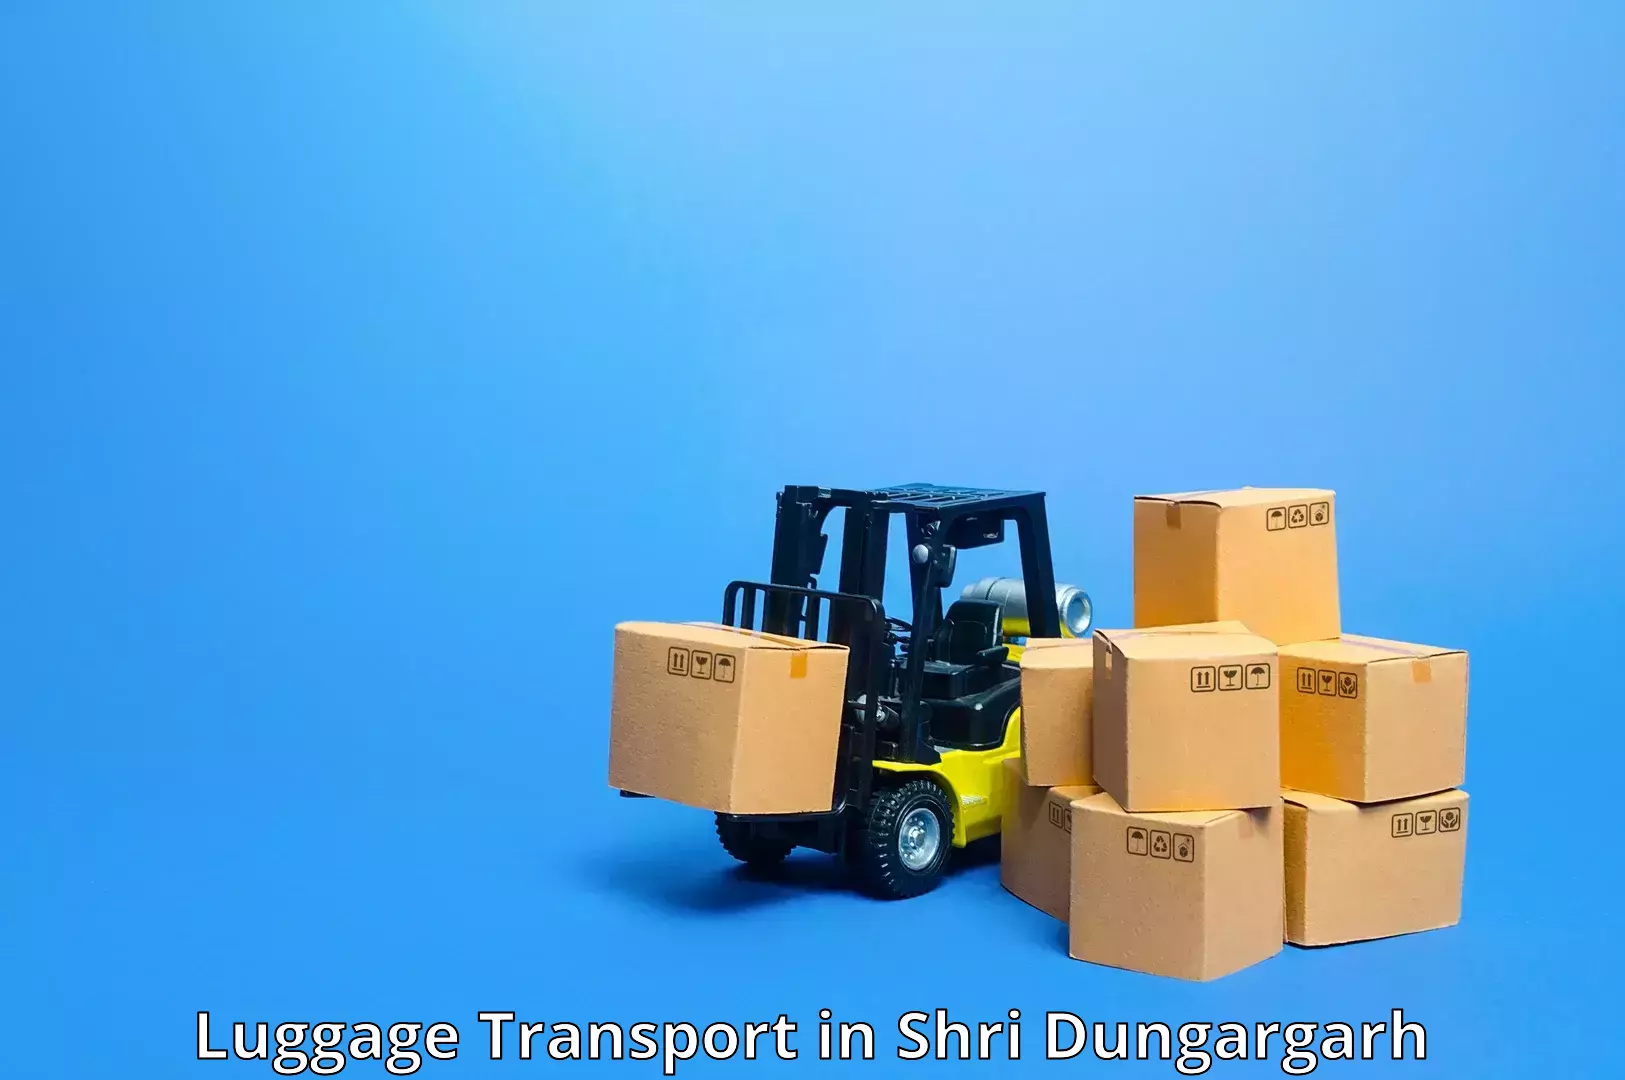 Luggage forwarding service in Shri Dungargarh